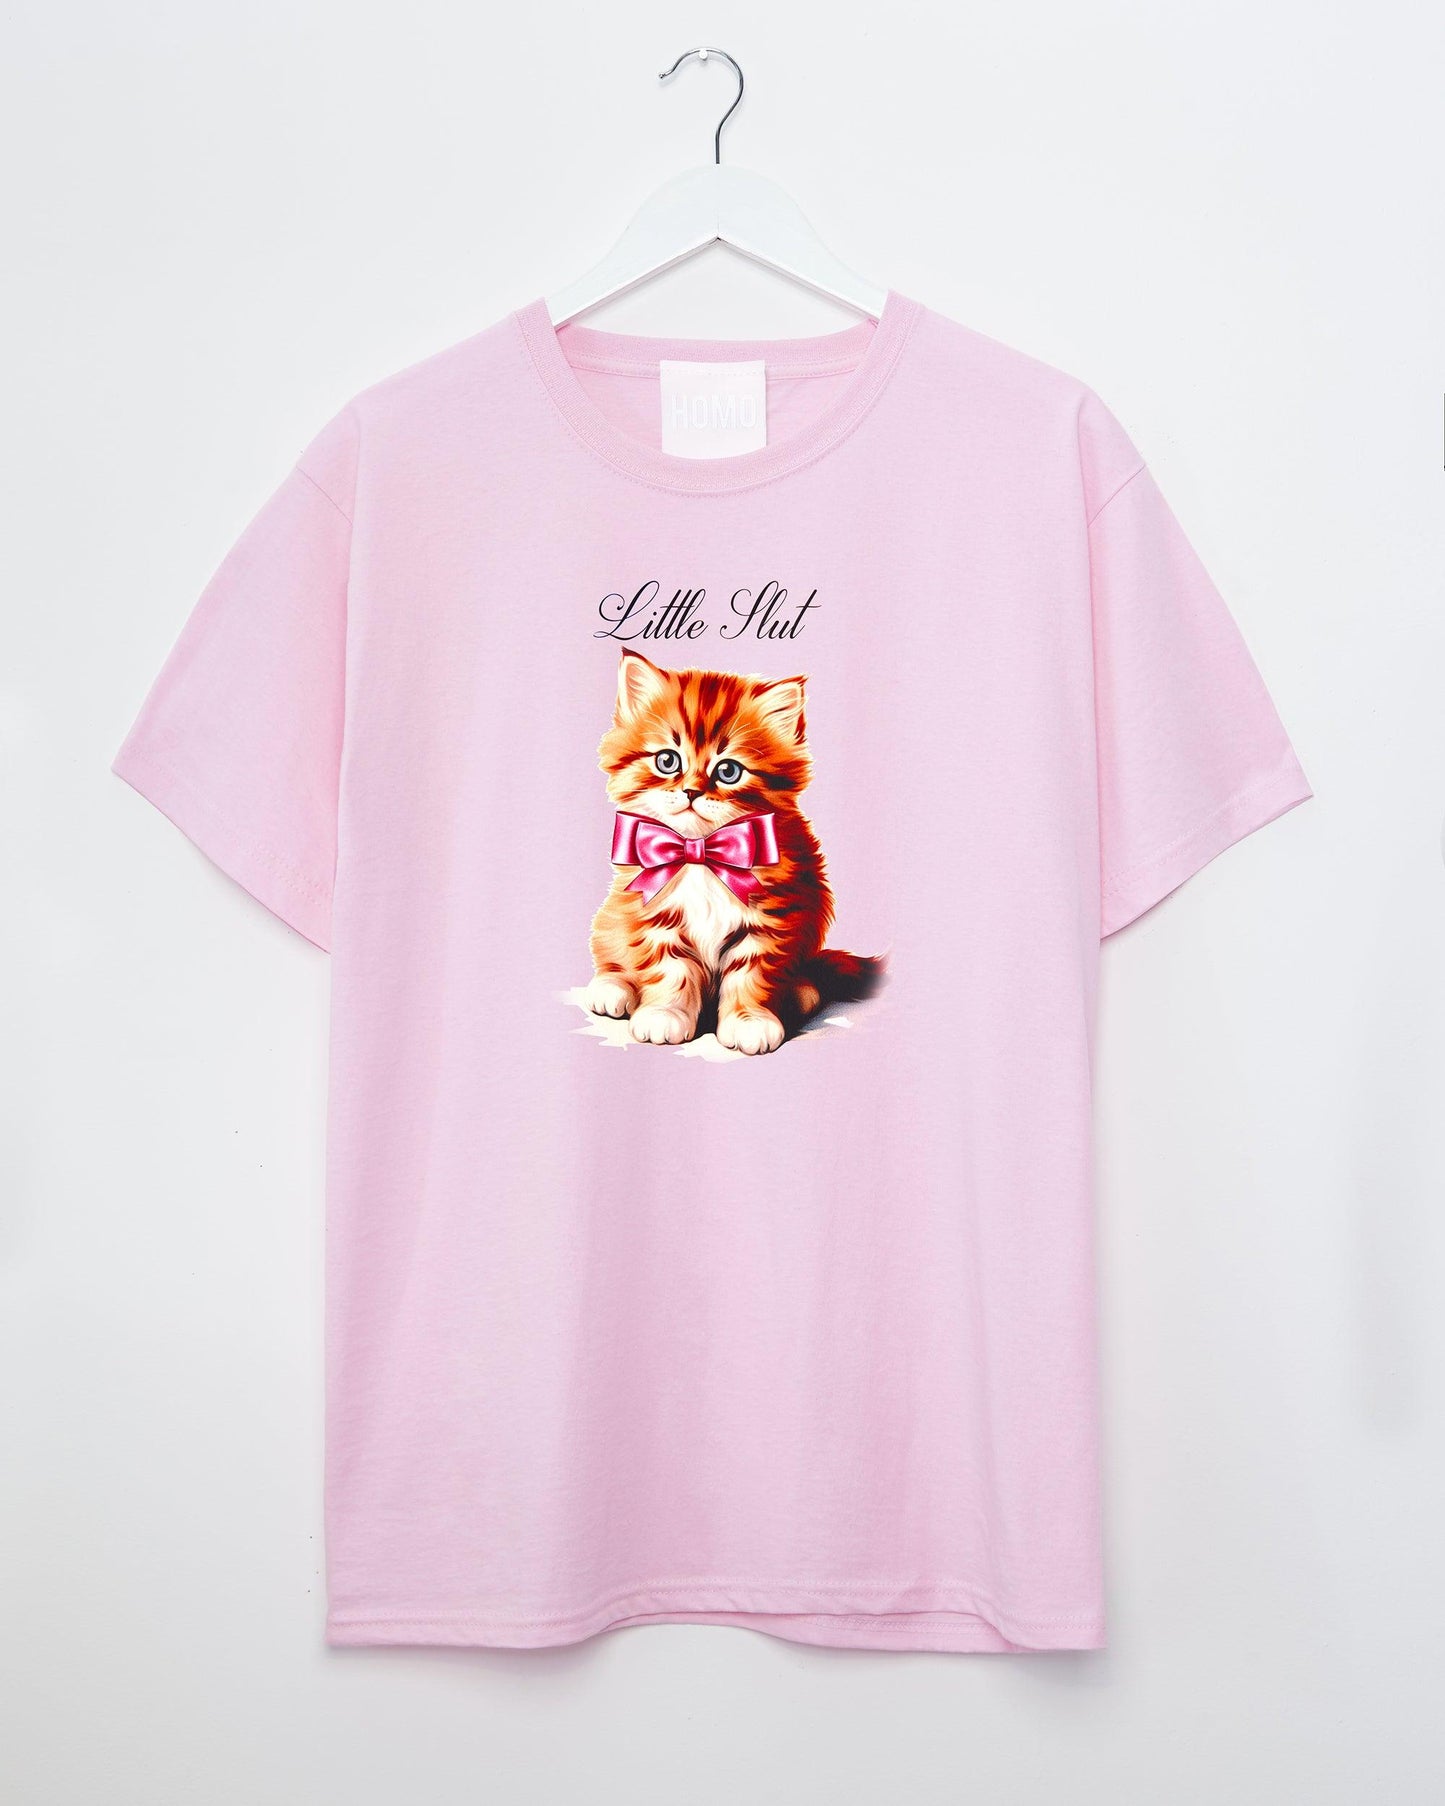 Little S/ut kitten - tshirt - HOMOLONDON